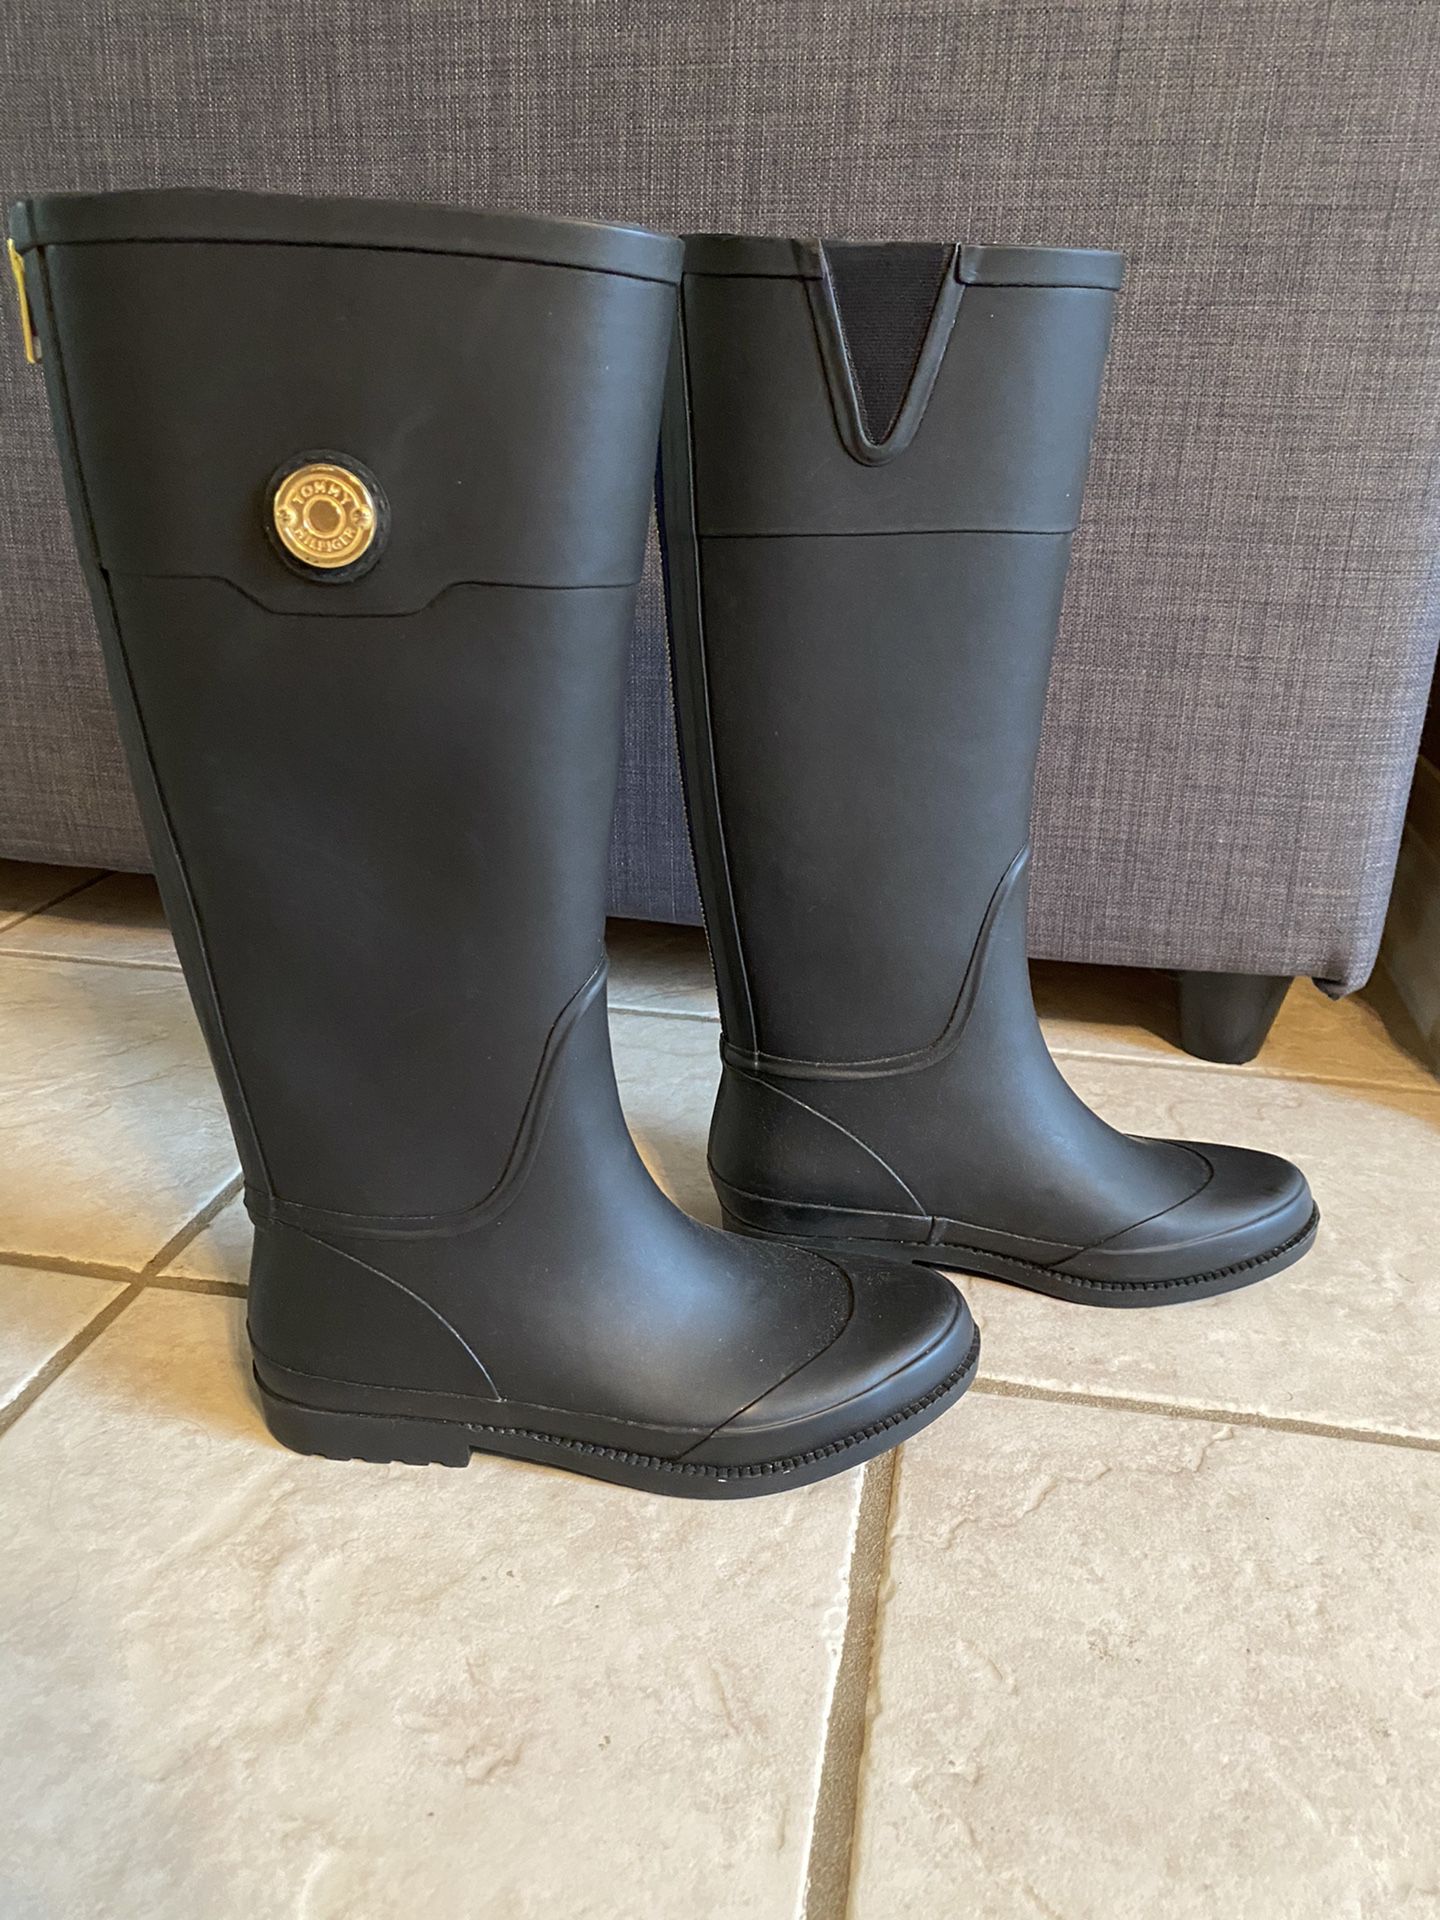 Tommy Hilfiger Rain boots - Womens - Size 7- like new